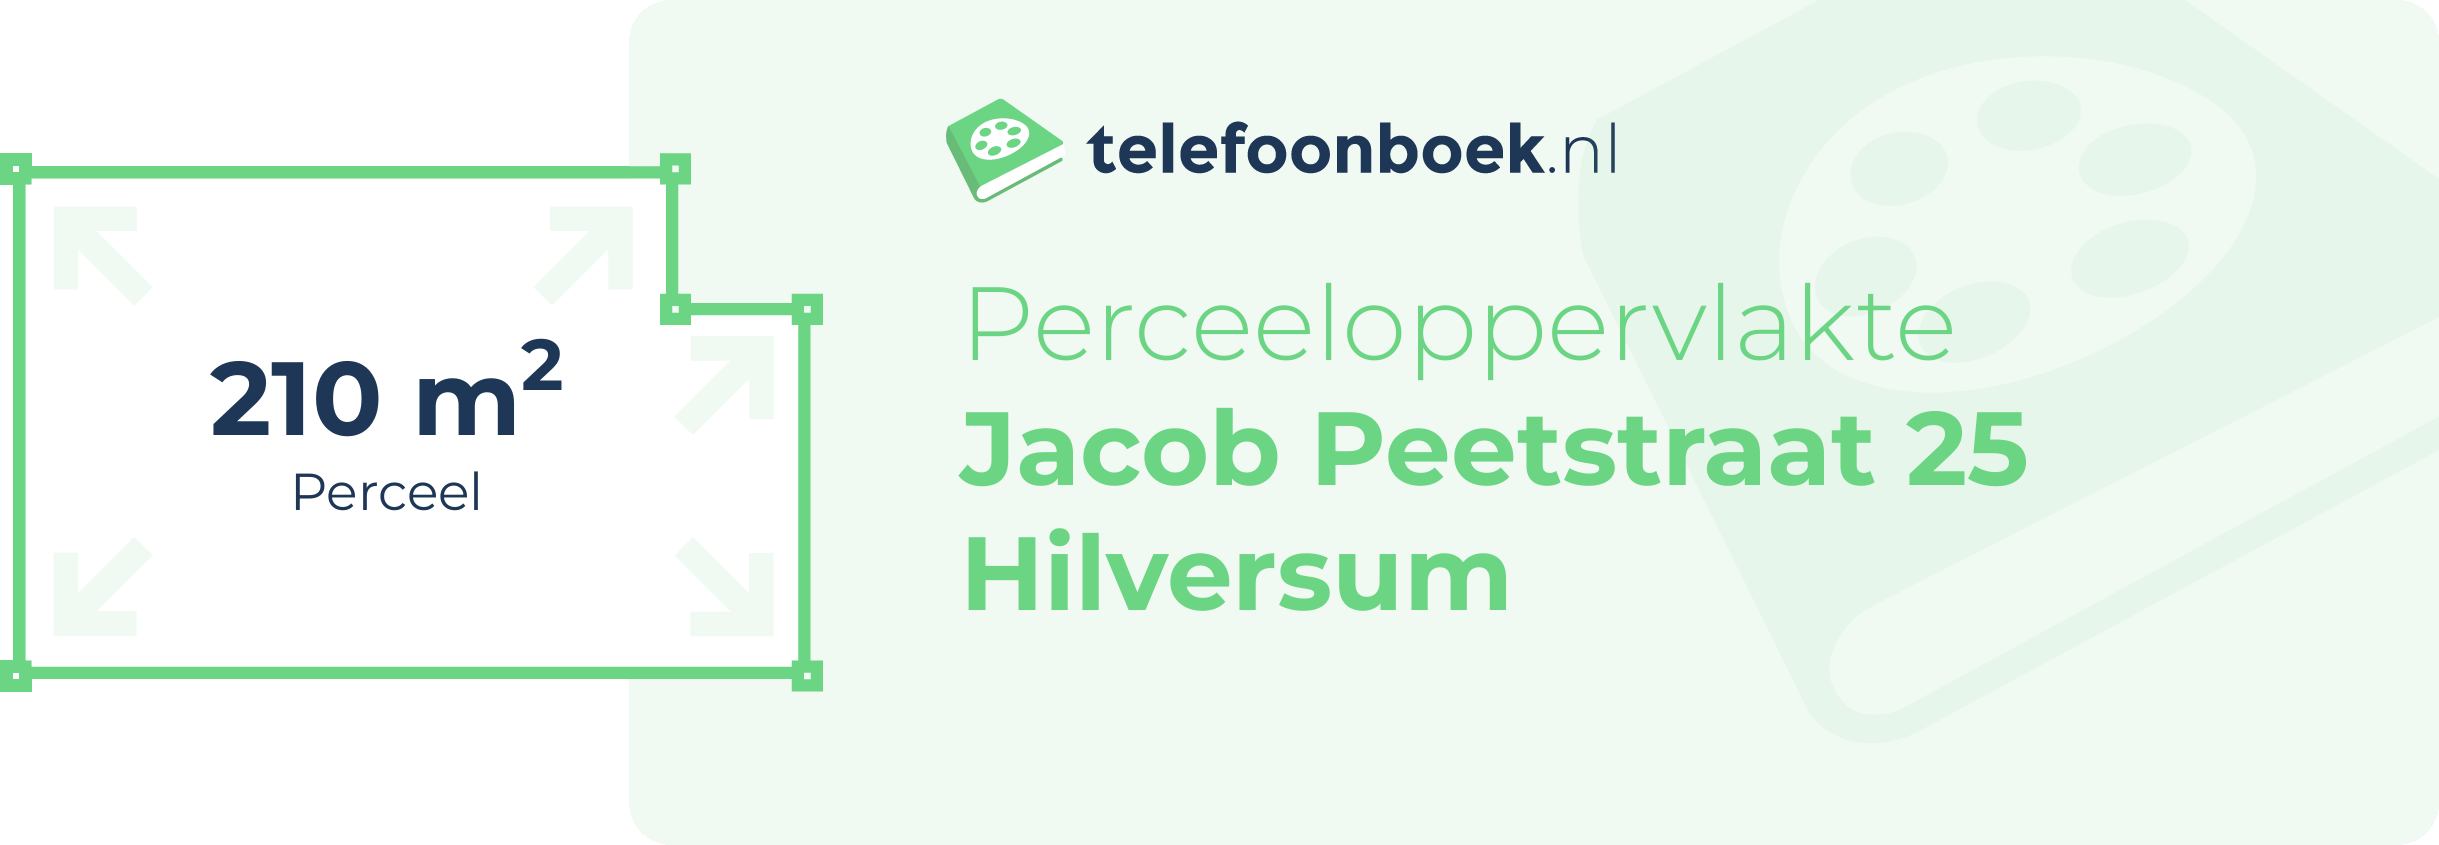 Perceeloppervlakte Jacob Peetstraat 25 Hilversum